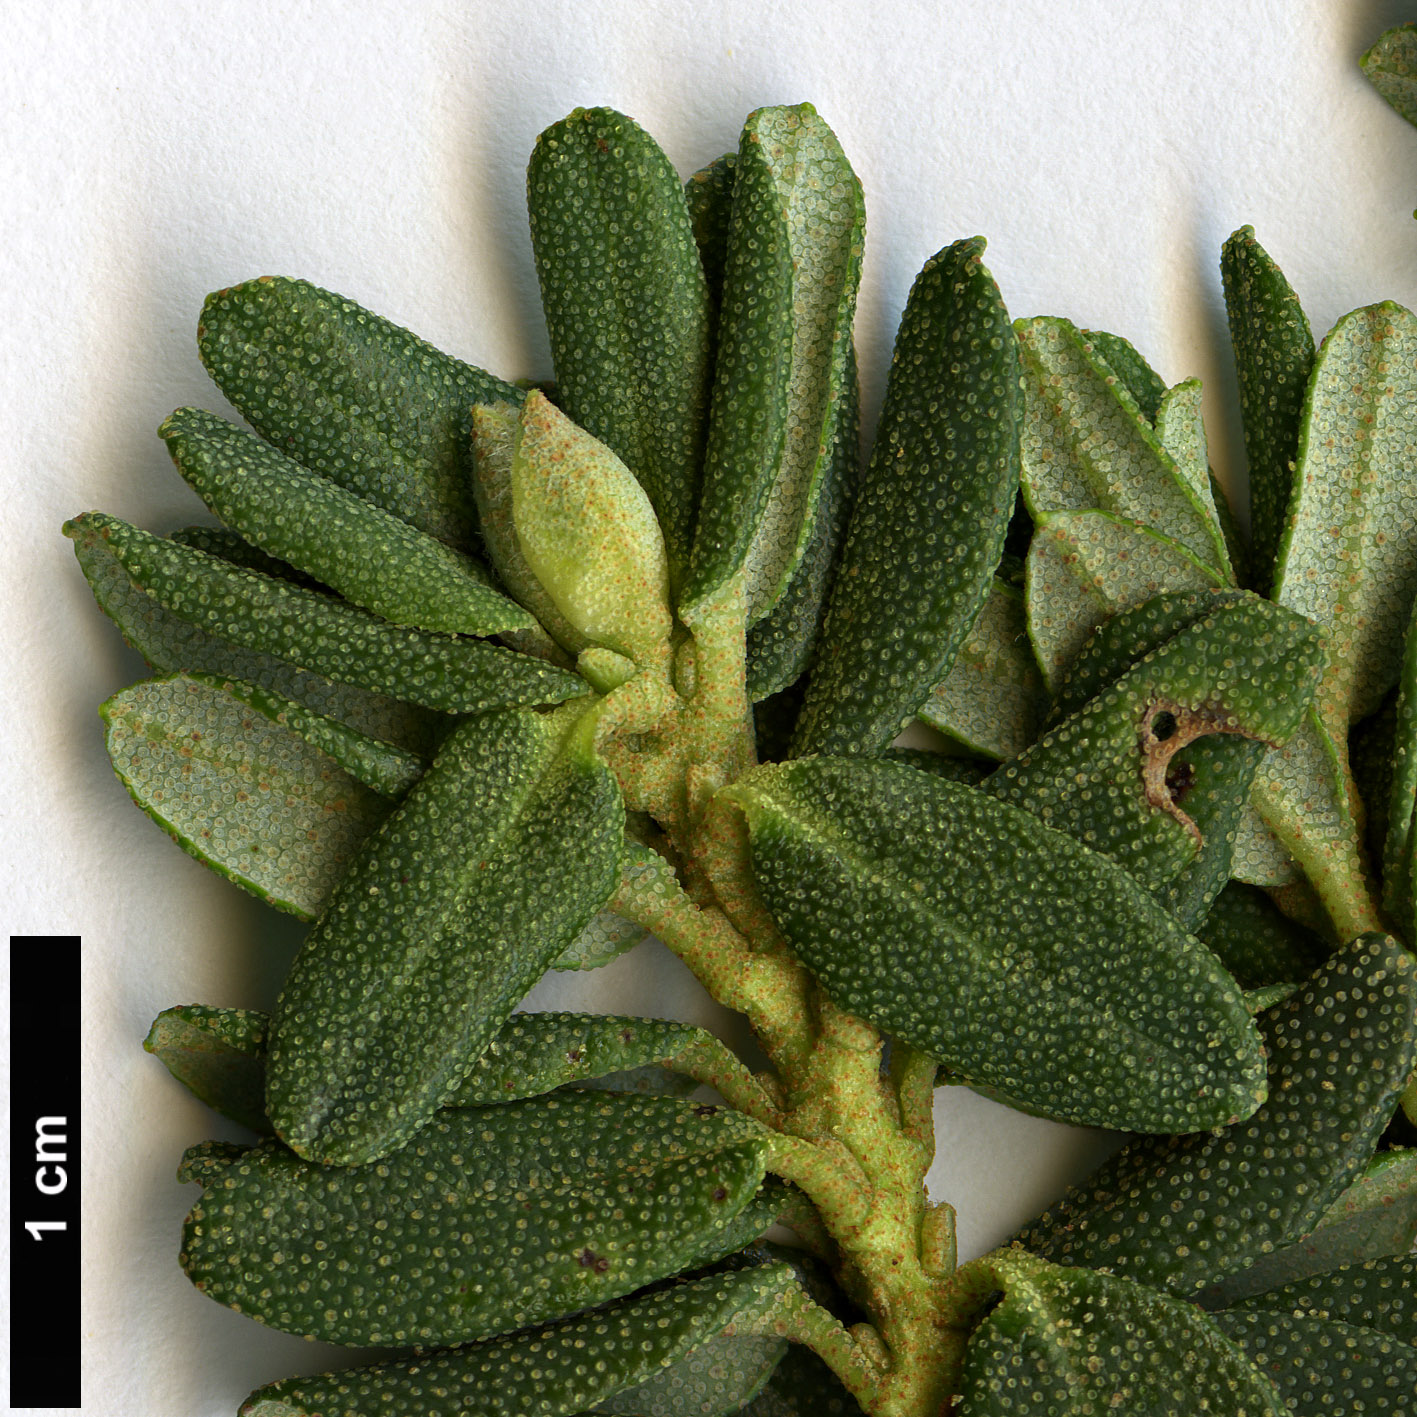 High resolution image: Family: Ericaceae - Genus: Rhododendron - Taxon: telmateium 